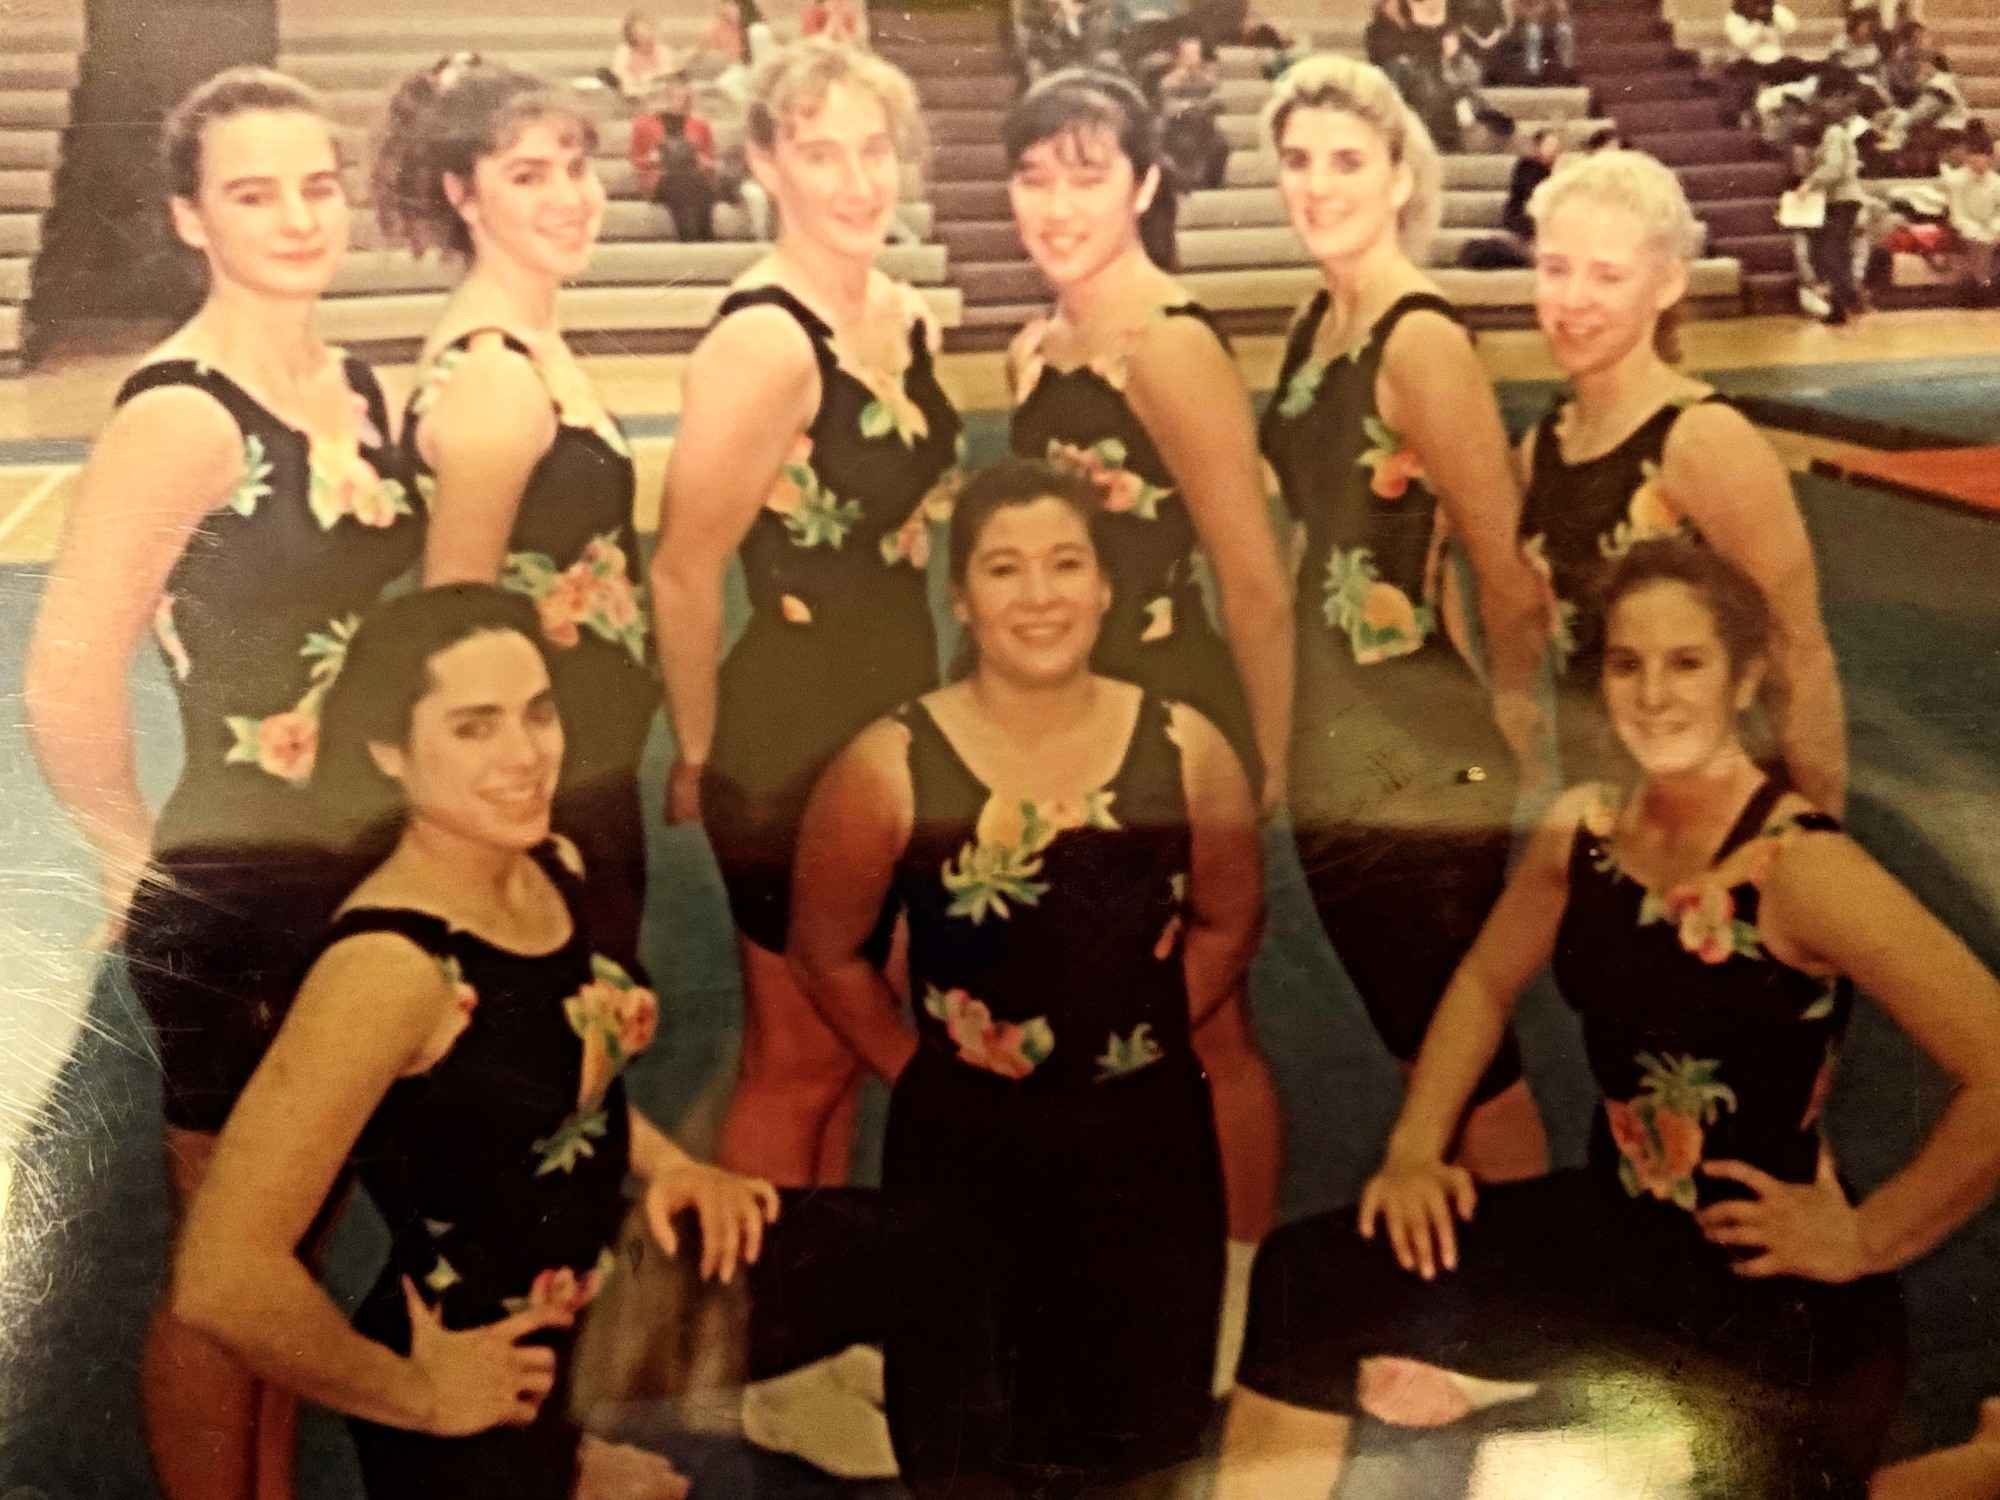 Members of the Brown Women's Gymnastics Team